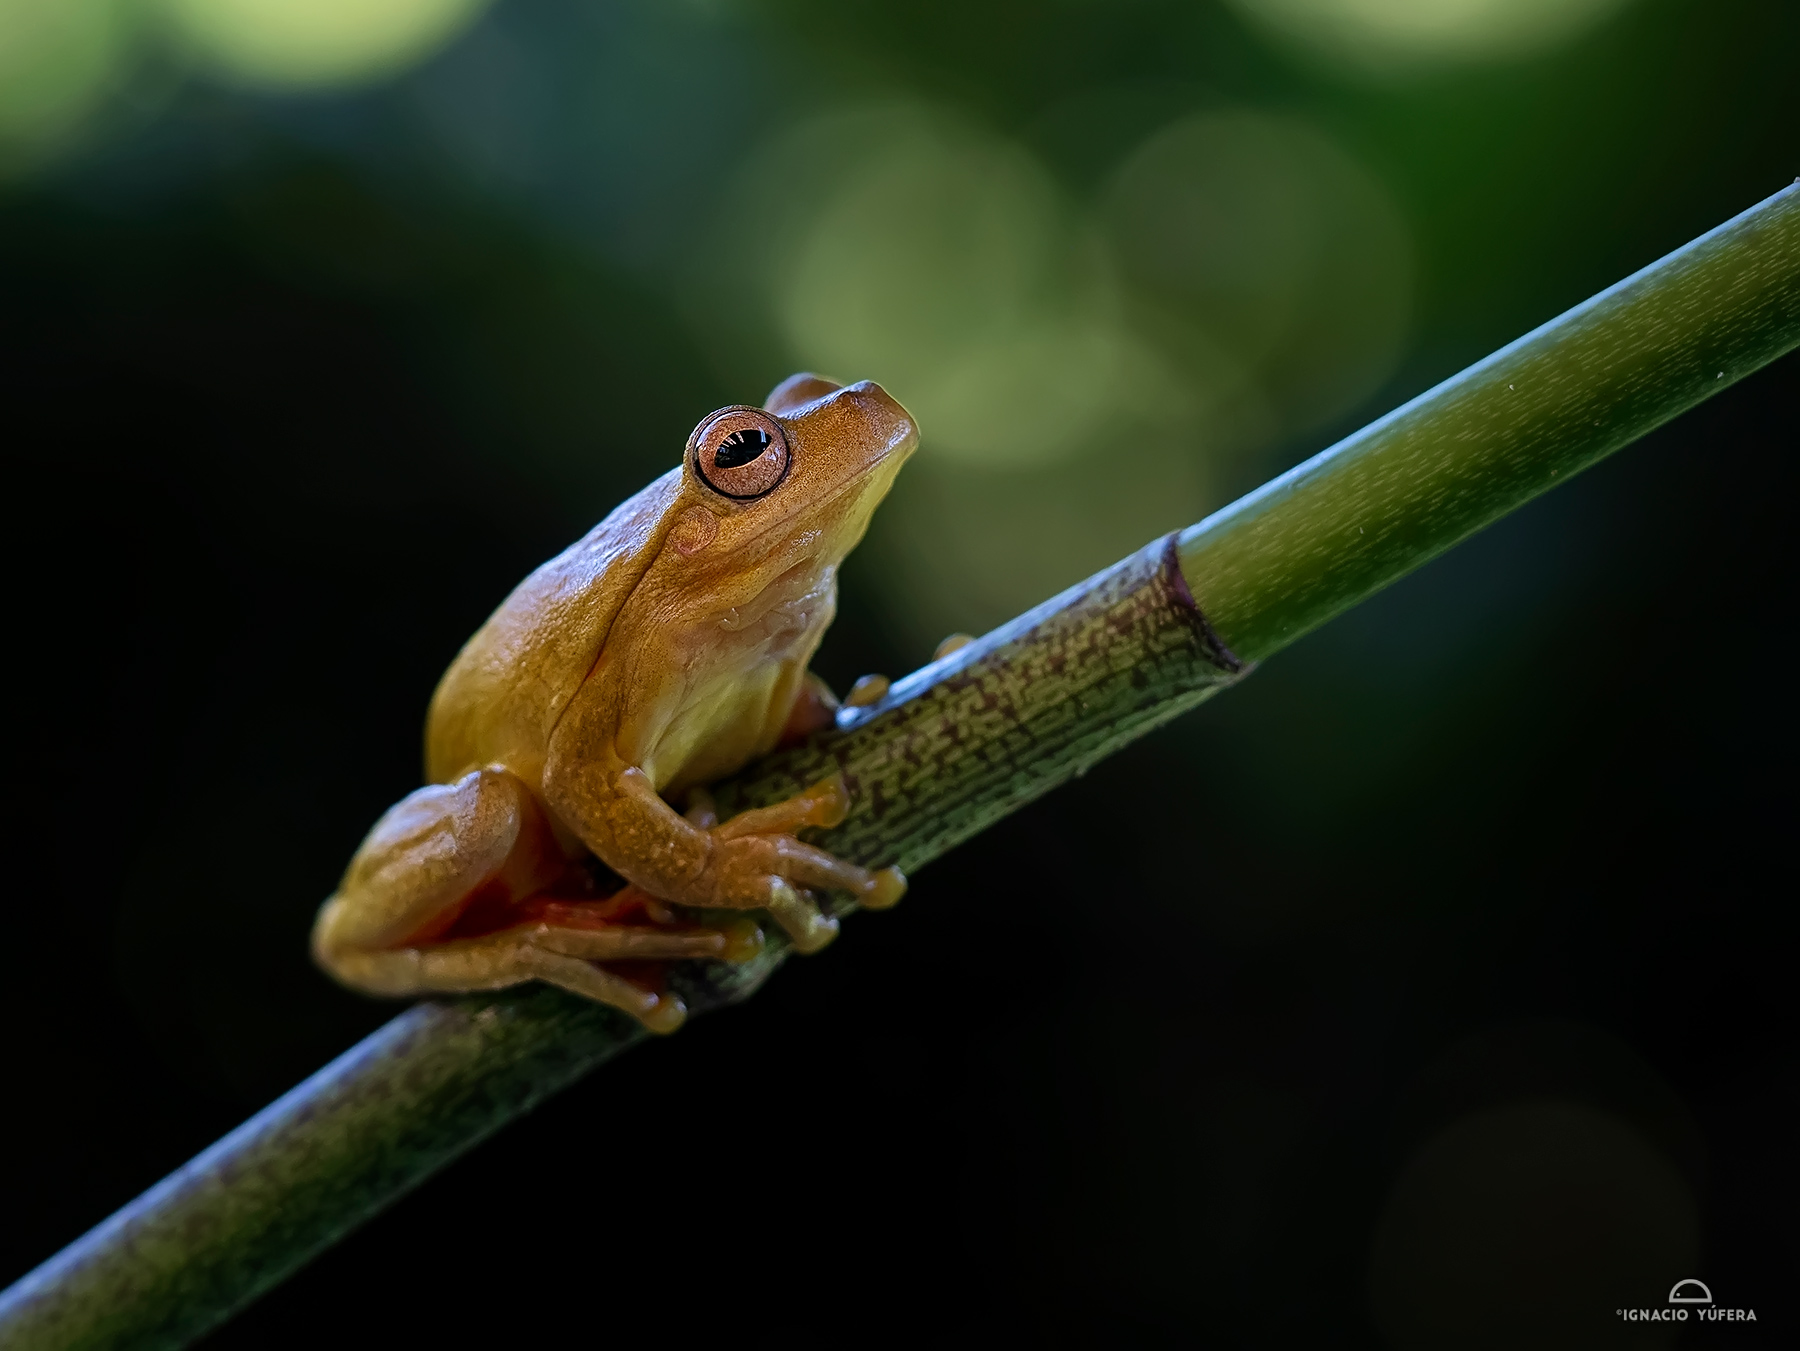 Tawny tree frog (Smilisca puma), Costa Rica, October